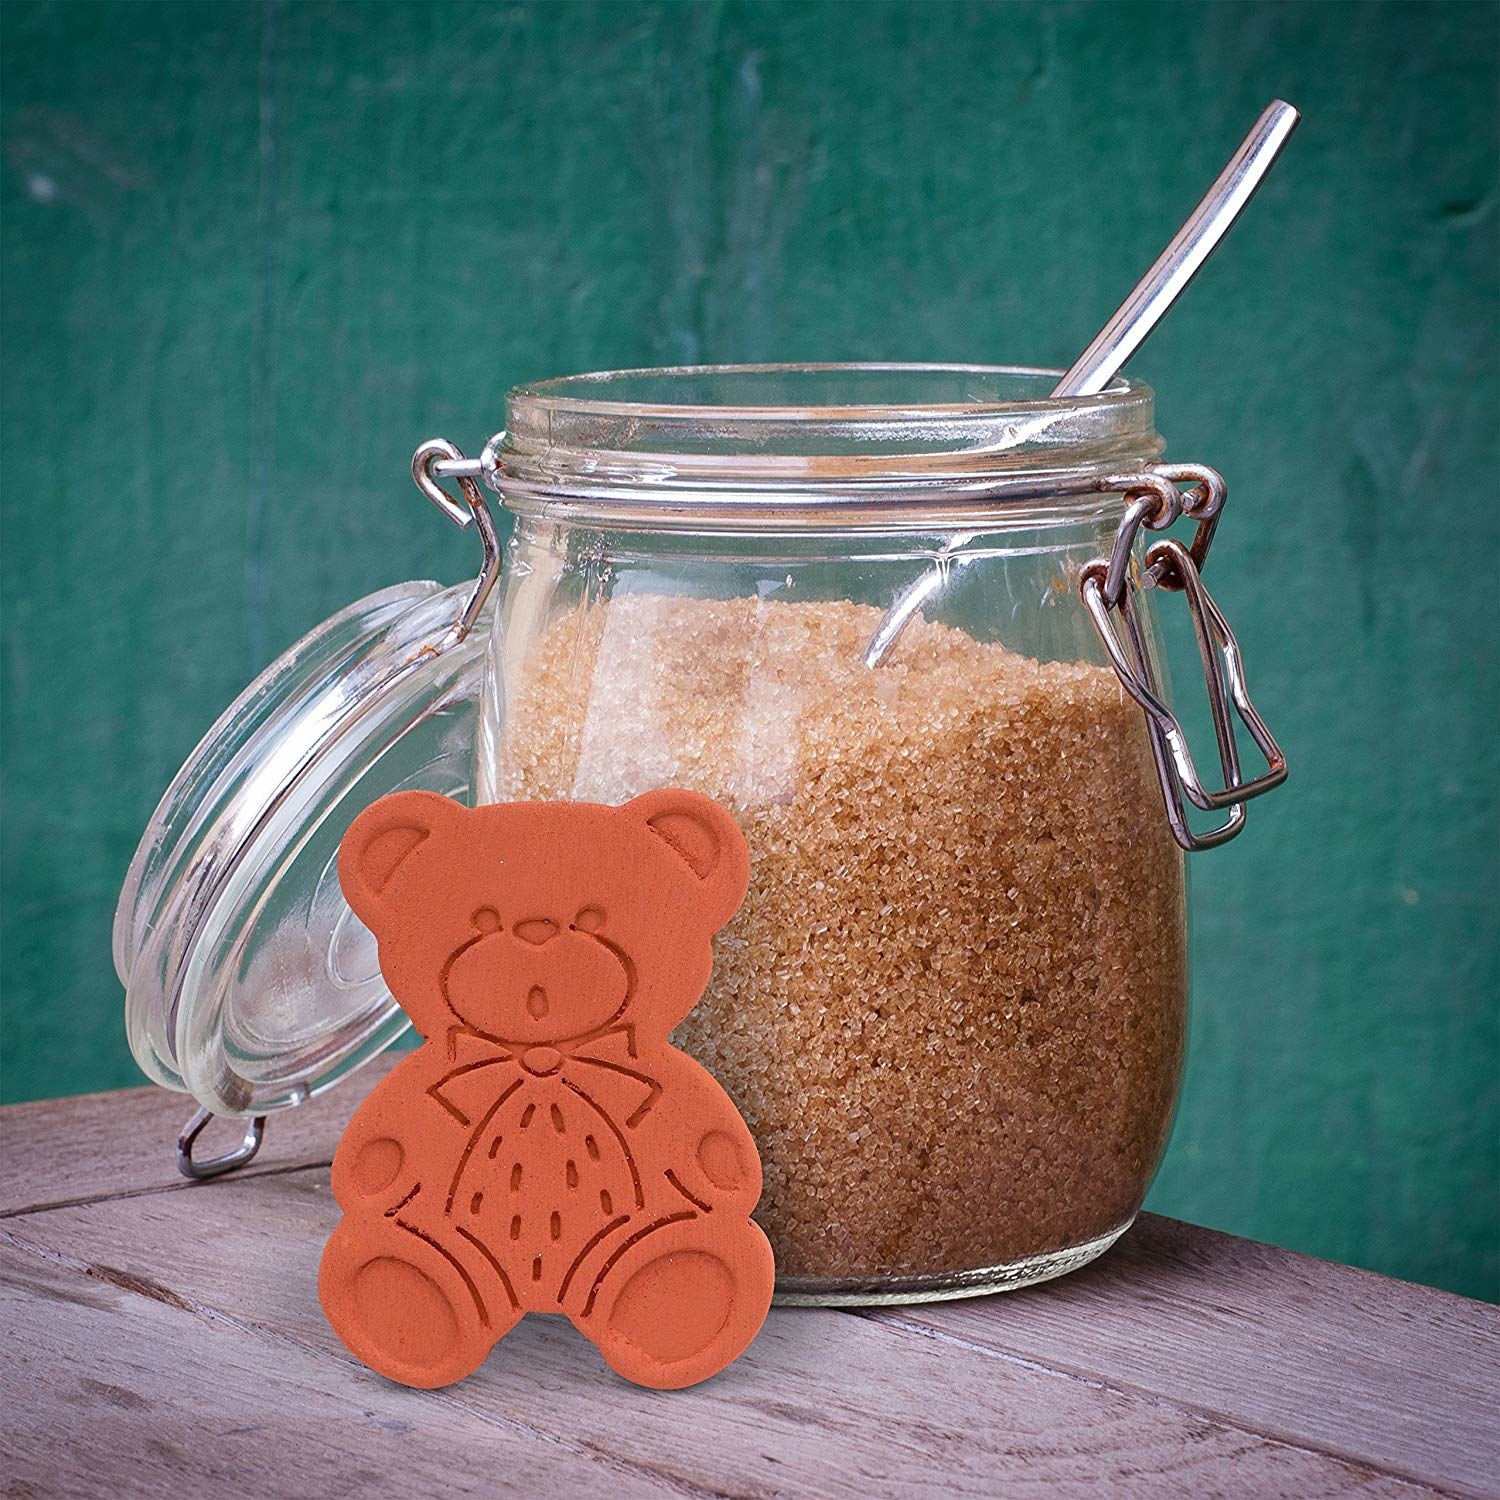 Terra-cotta bear next to jar of brown sugar